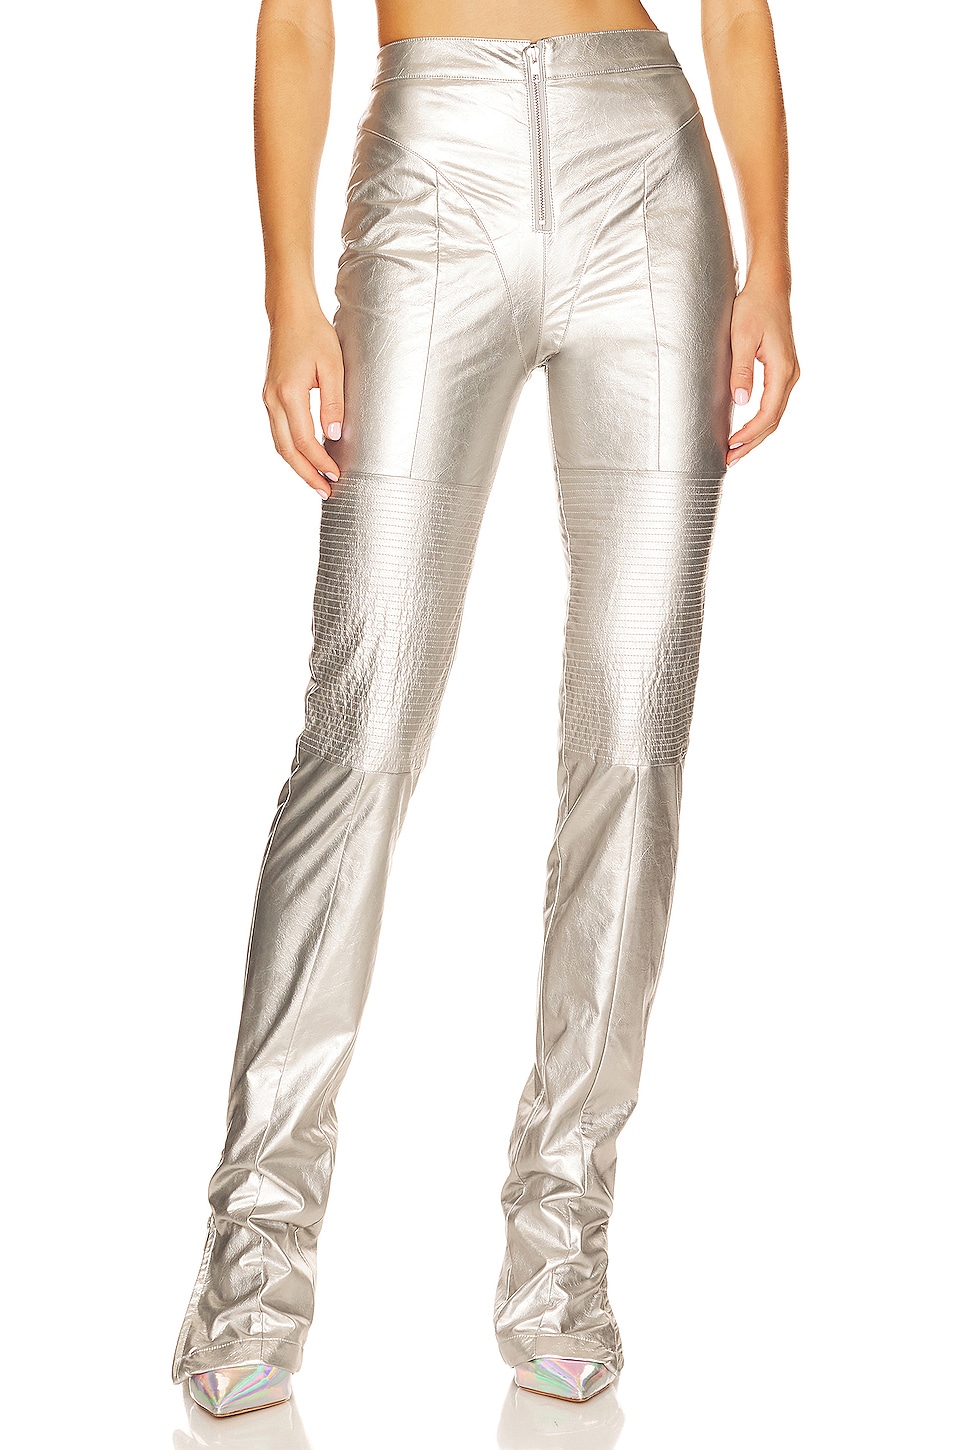 Crewcuts Silver space metallic girls leggings, 2 | eBay